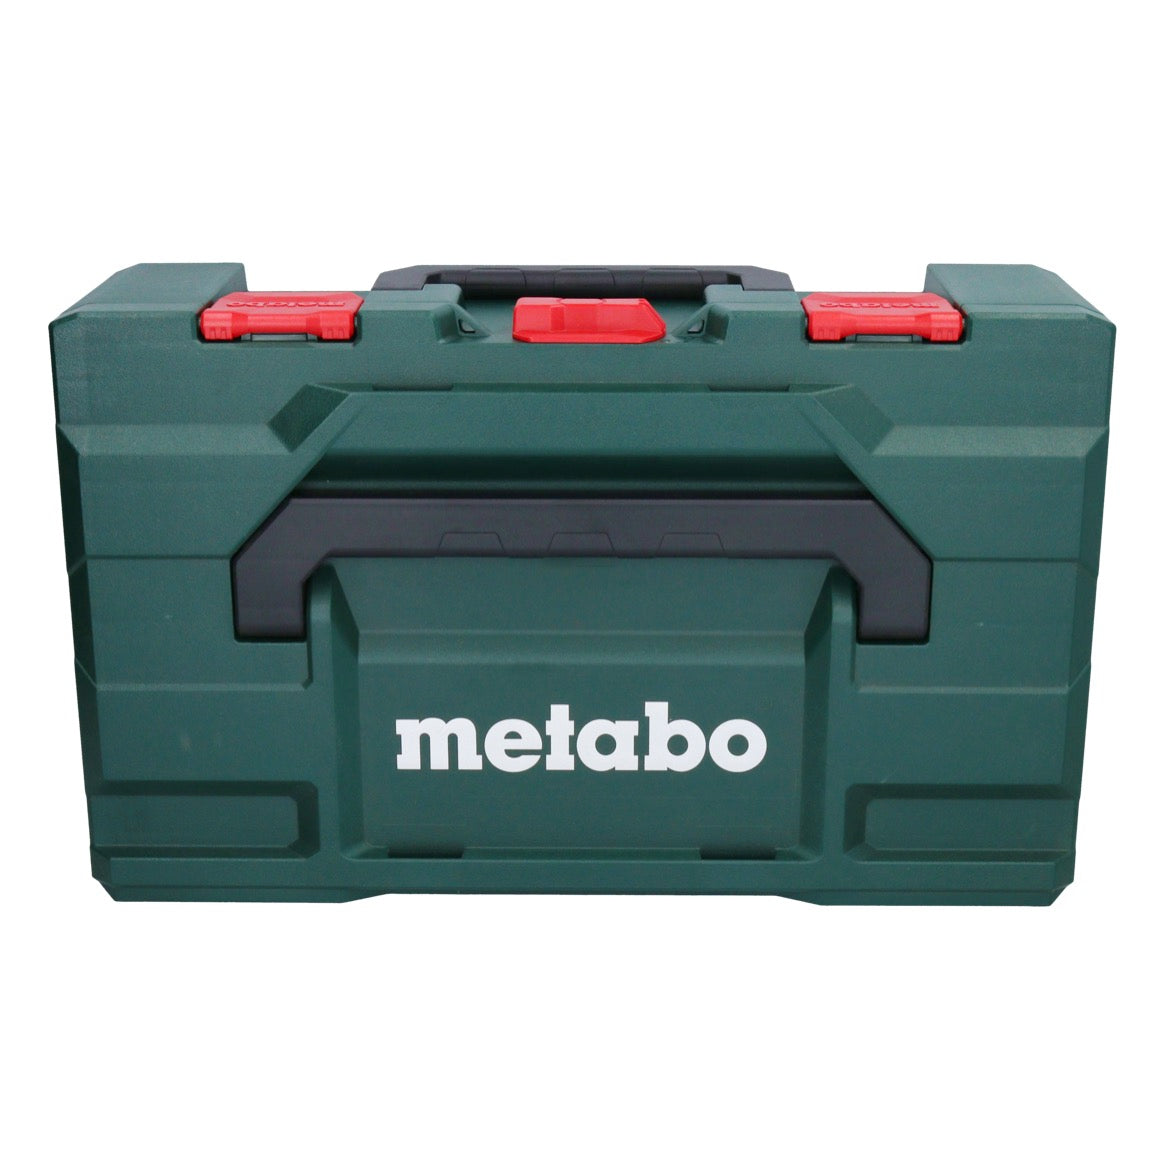 Metabo WVB 18 LTX BL 15-125 Quick Akku Winkelschleifer 18 V 125 mm ( 601731840 ) Brushless + metaBOX - ohne Akku, ohne Ladegerät